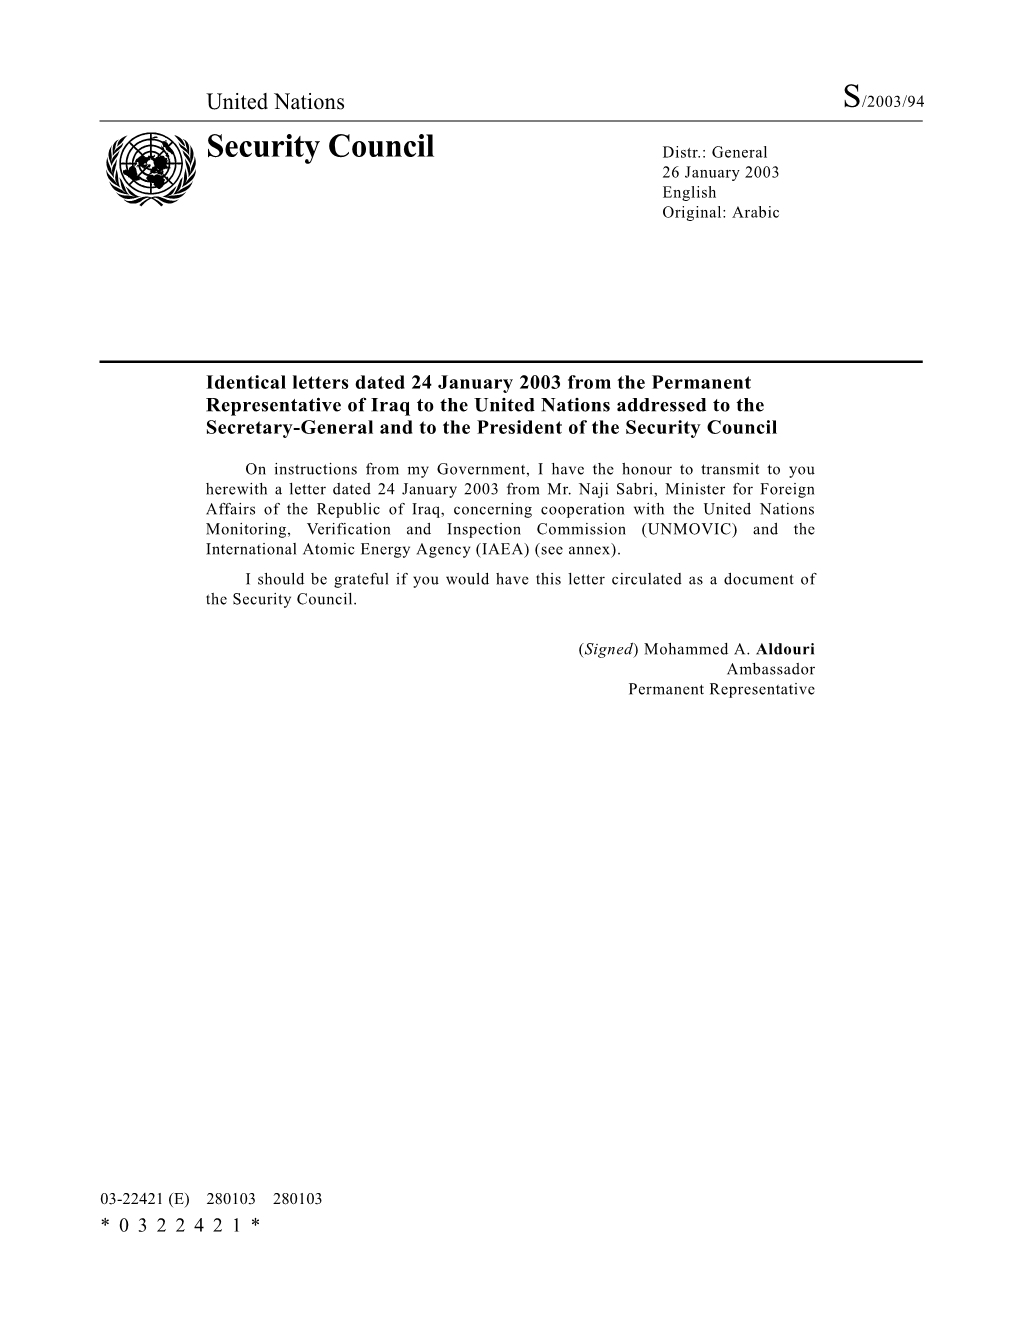 Security Council Distr.: General 26 January 2003 English